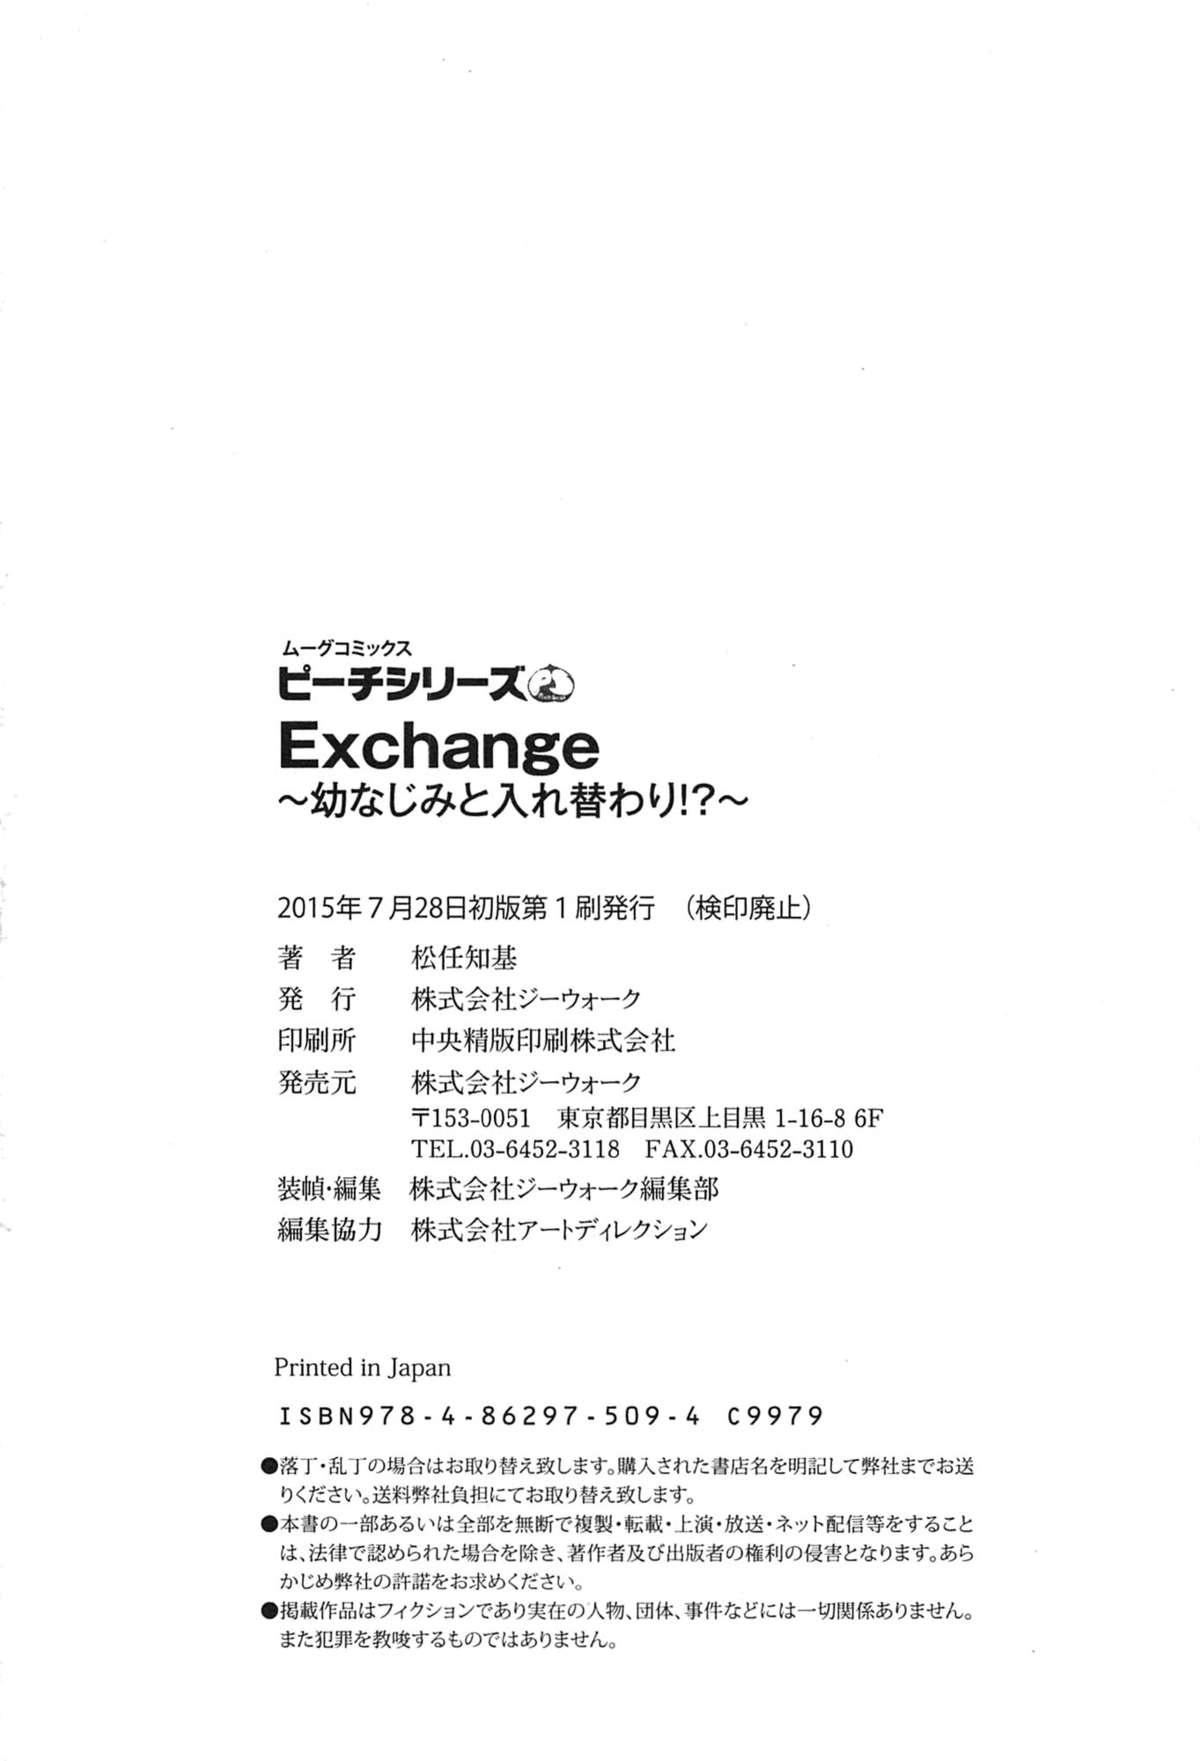 Exchange 224